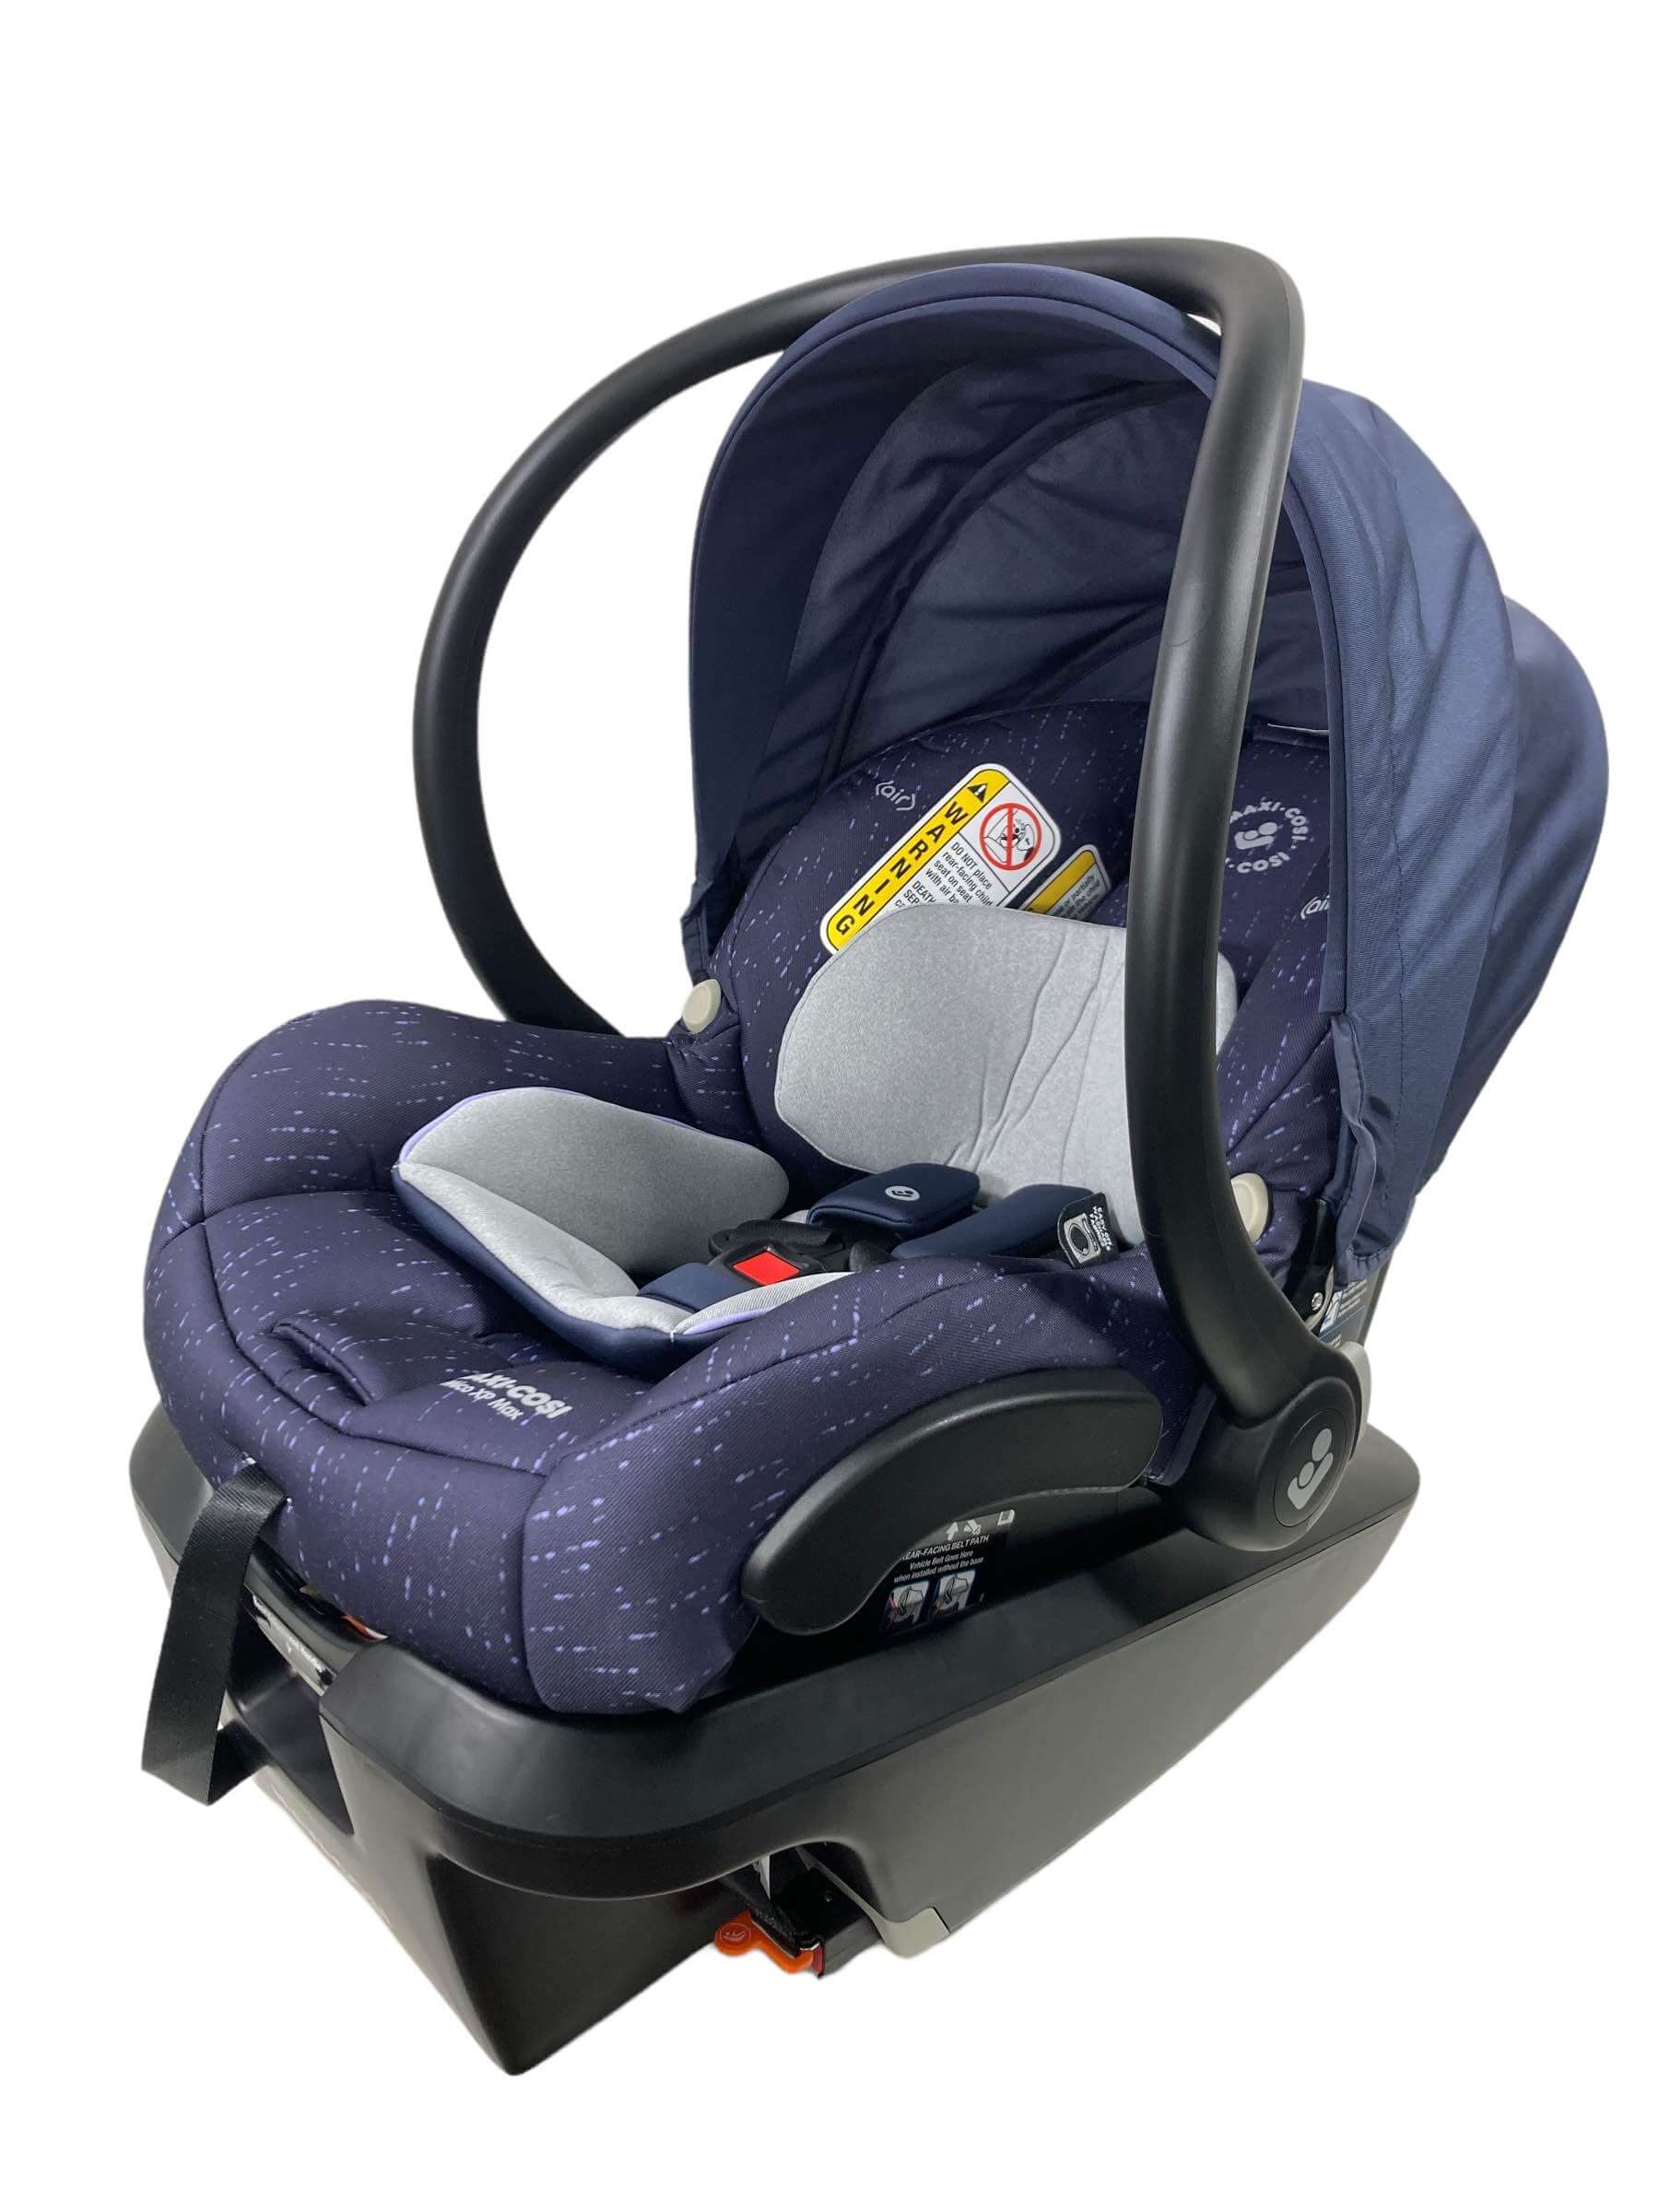 Maxi-Cosi Mico XP Max Infant Car Seat, Sonar Plum, 2021